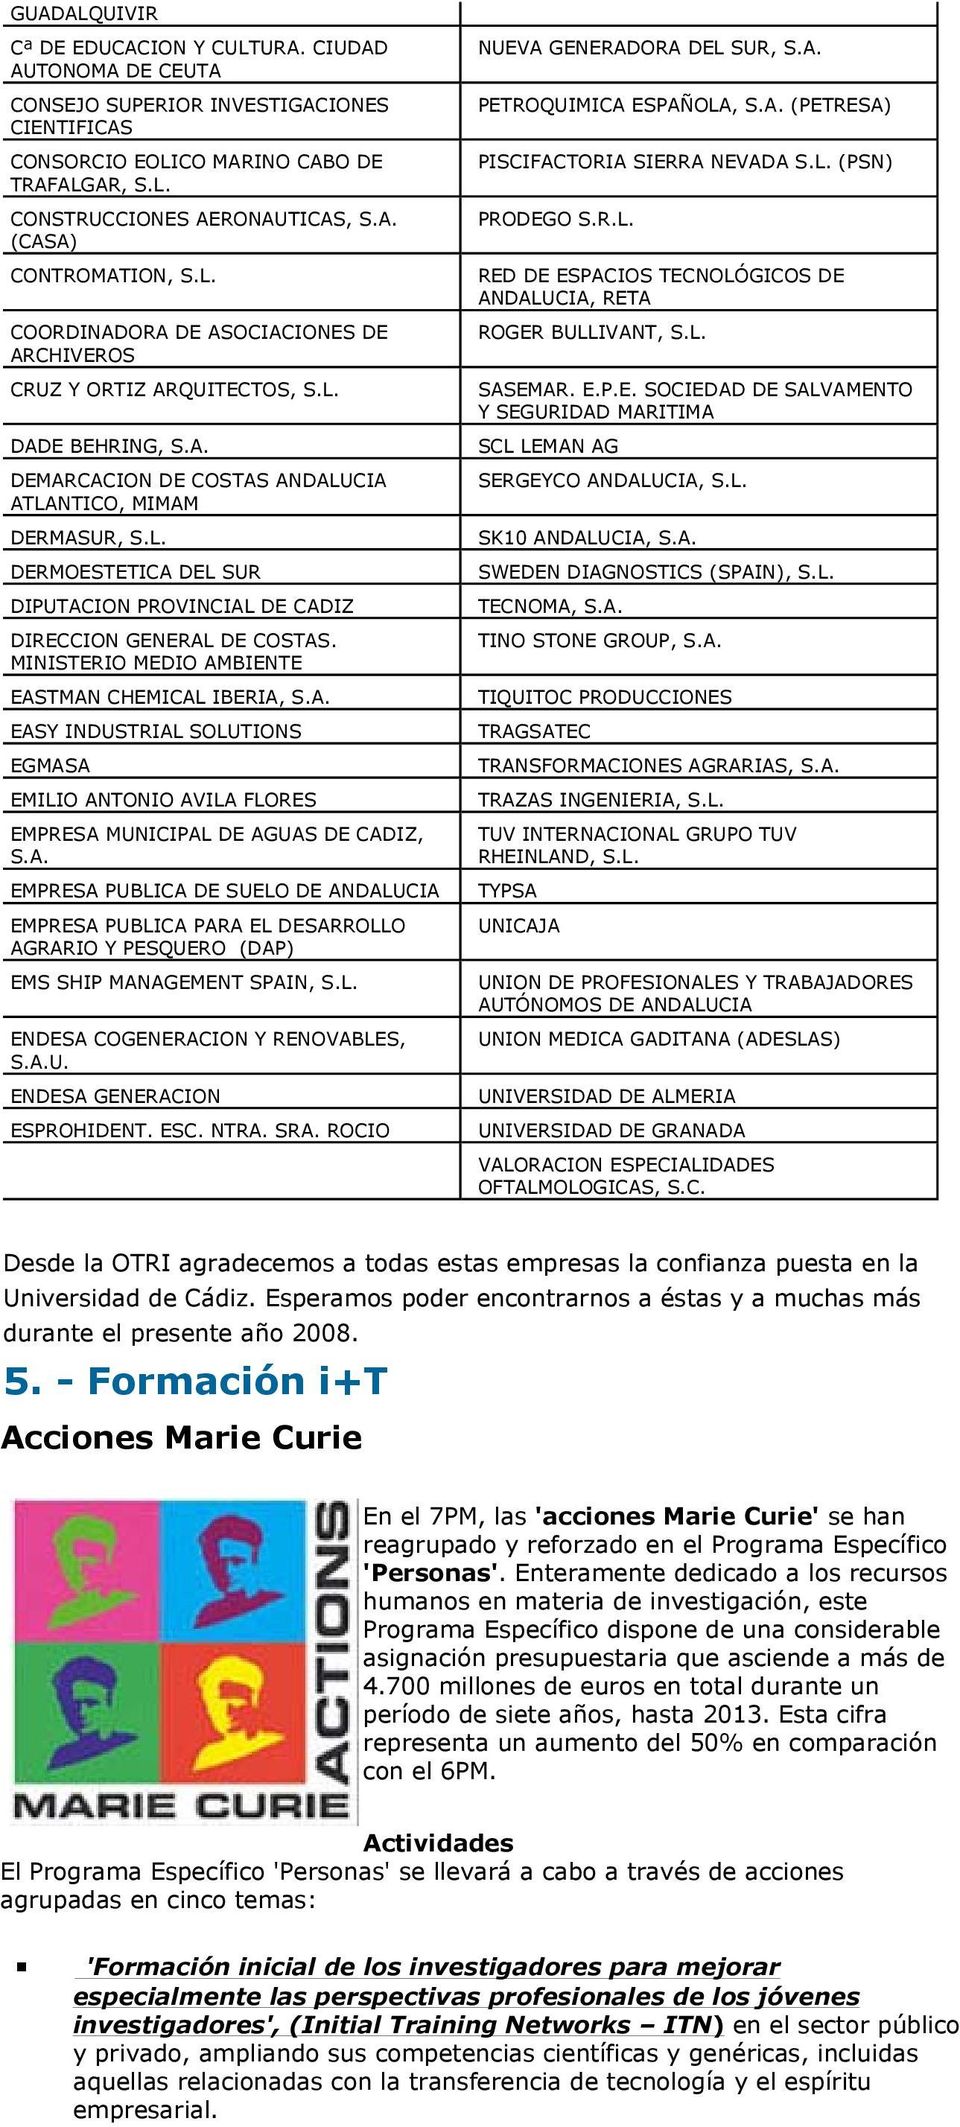 MINISTERIO MEDIO AMBIENTE EASTMAN CHEMICAL IBERIA, S.A. EASY INDUSTRIAL SOLUTIONS EGMASA EMILIO ANTONIO AVILA FLORES EMPRESA MUNICIPAL DE AGUAS DE CADIZ, S.A. EMPRESA PUBLICA DE SUELO DE ANDALUCIA EMPRESA PUBLICA PARA EL DESARROLLO AGRARIO Y PESQUERO (DAP) EMS SHIP MANAGEMENT SPAIN, S.